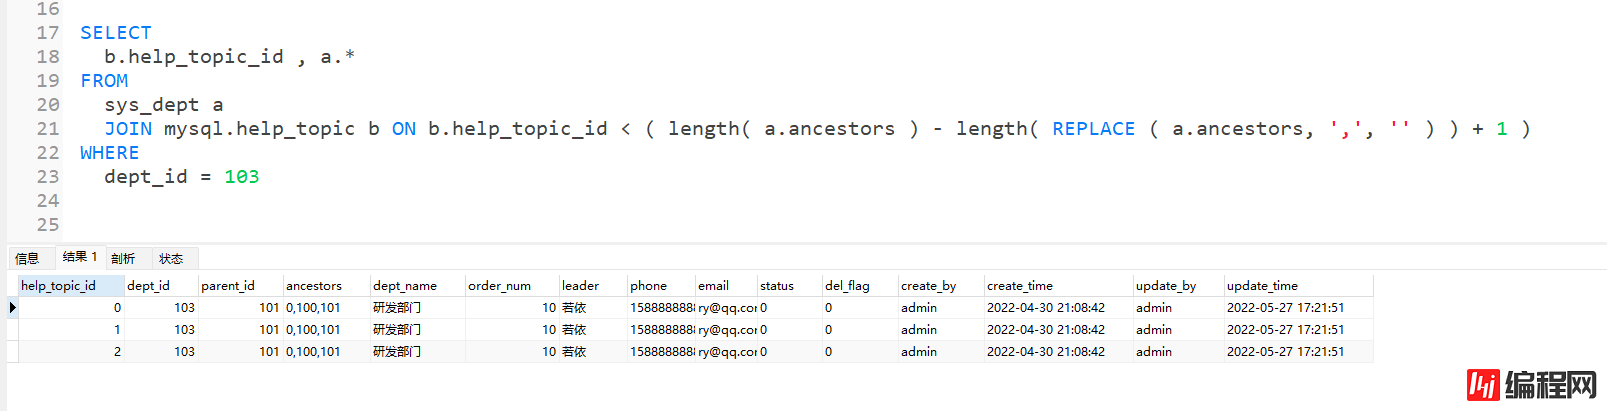 mysql拆分字符串作为查询条件的示例代码